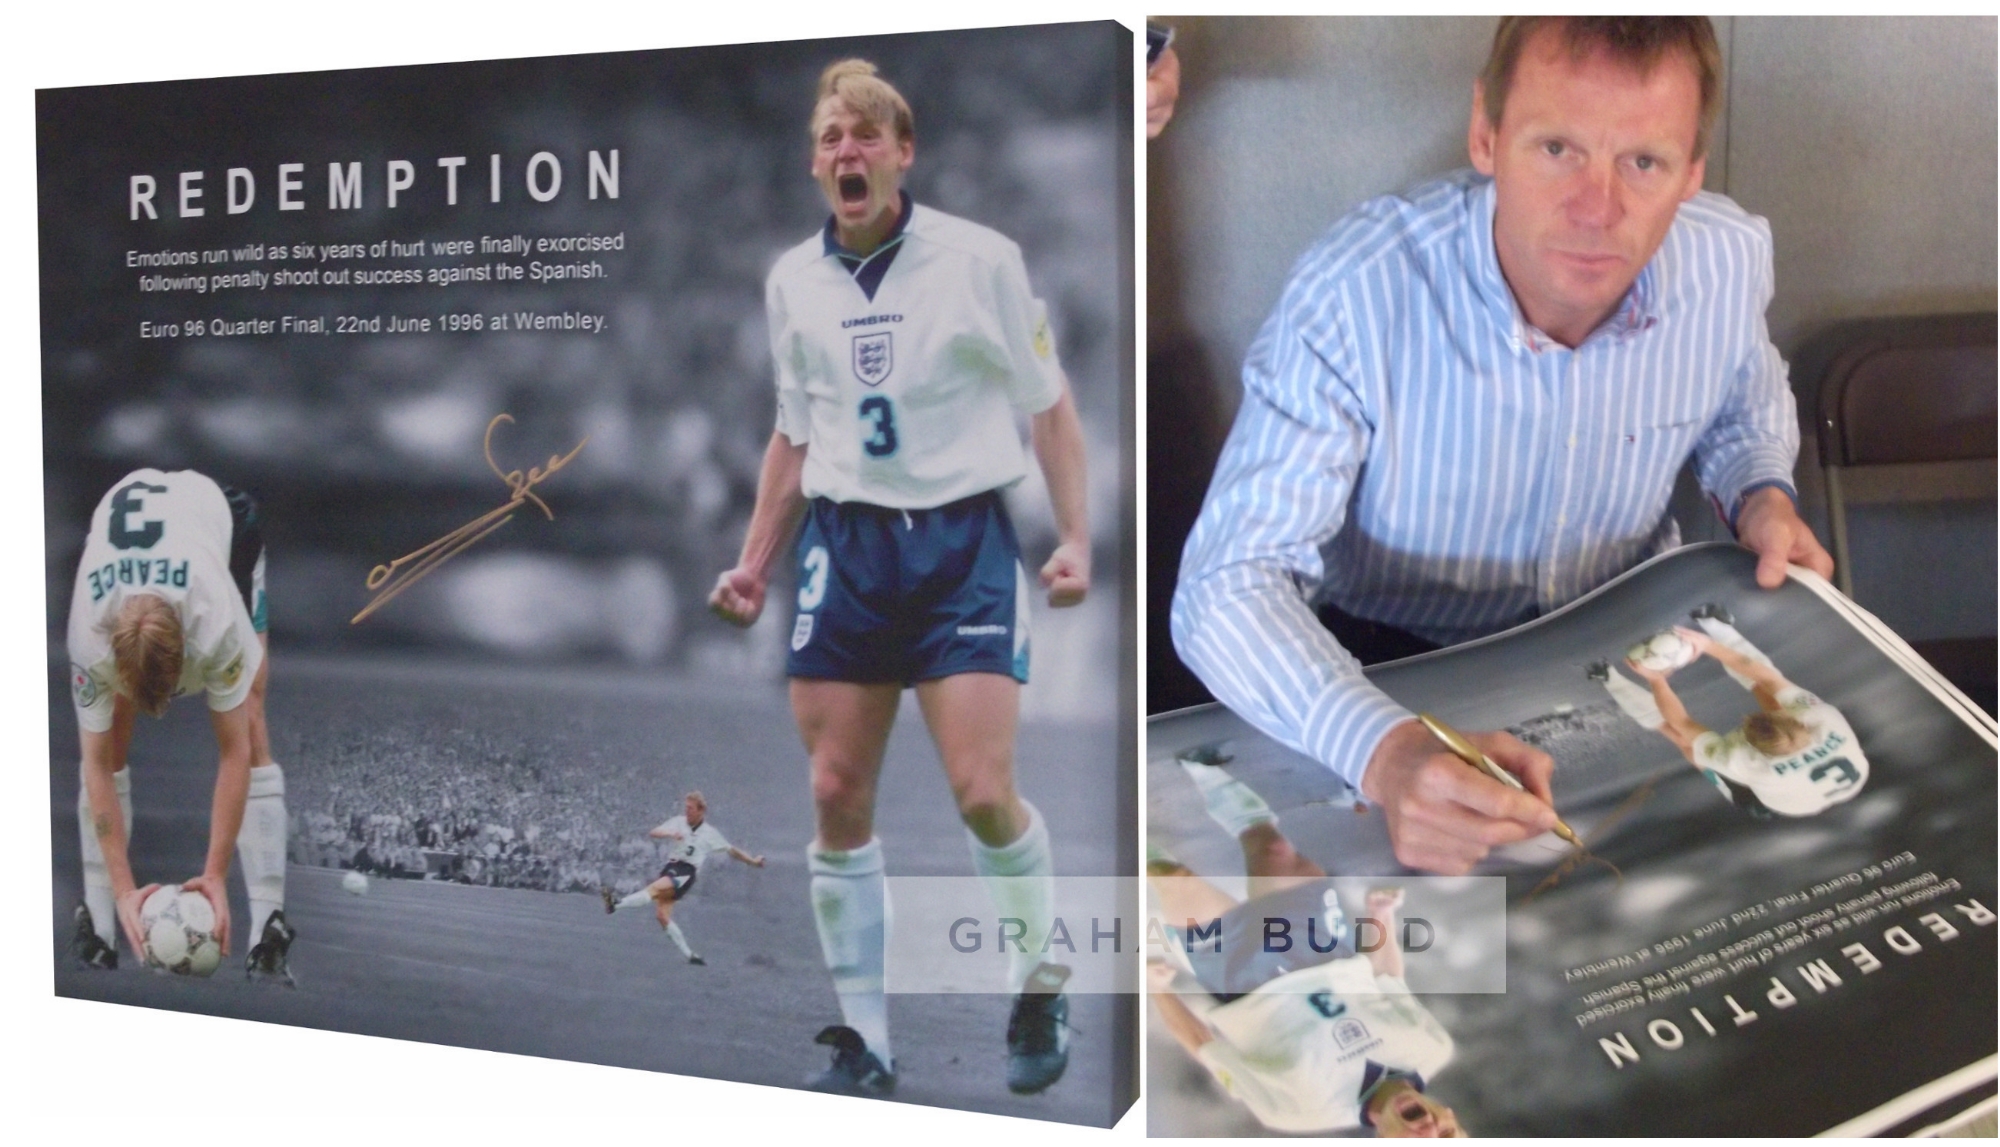 Euro 96 Stuart Pearce signed canvas titled “REDEMPTION”, it encaptures the moment Psycho scored